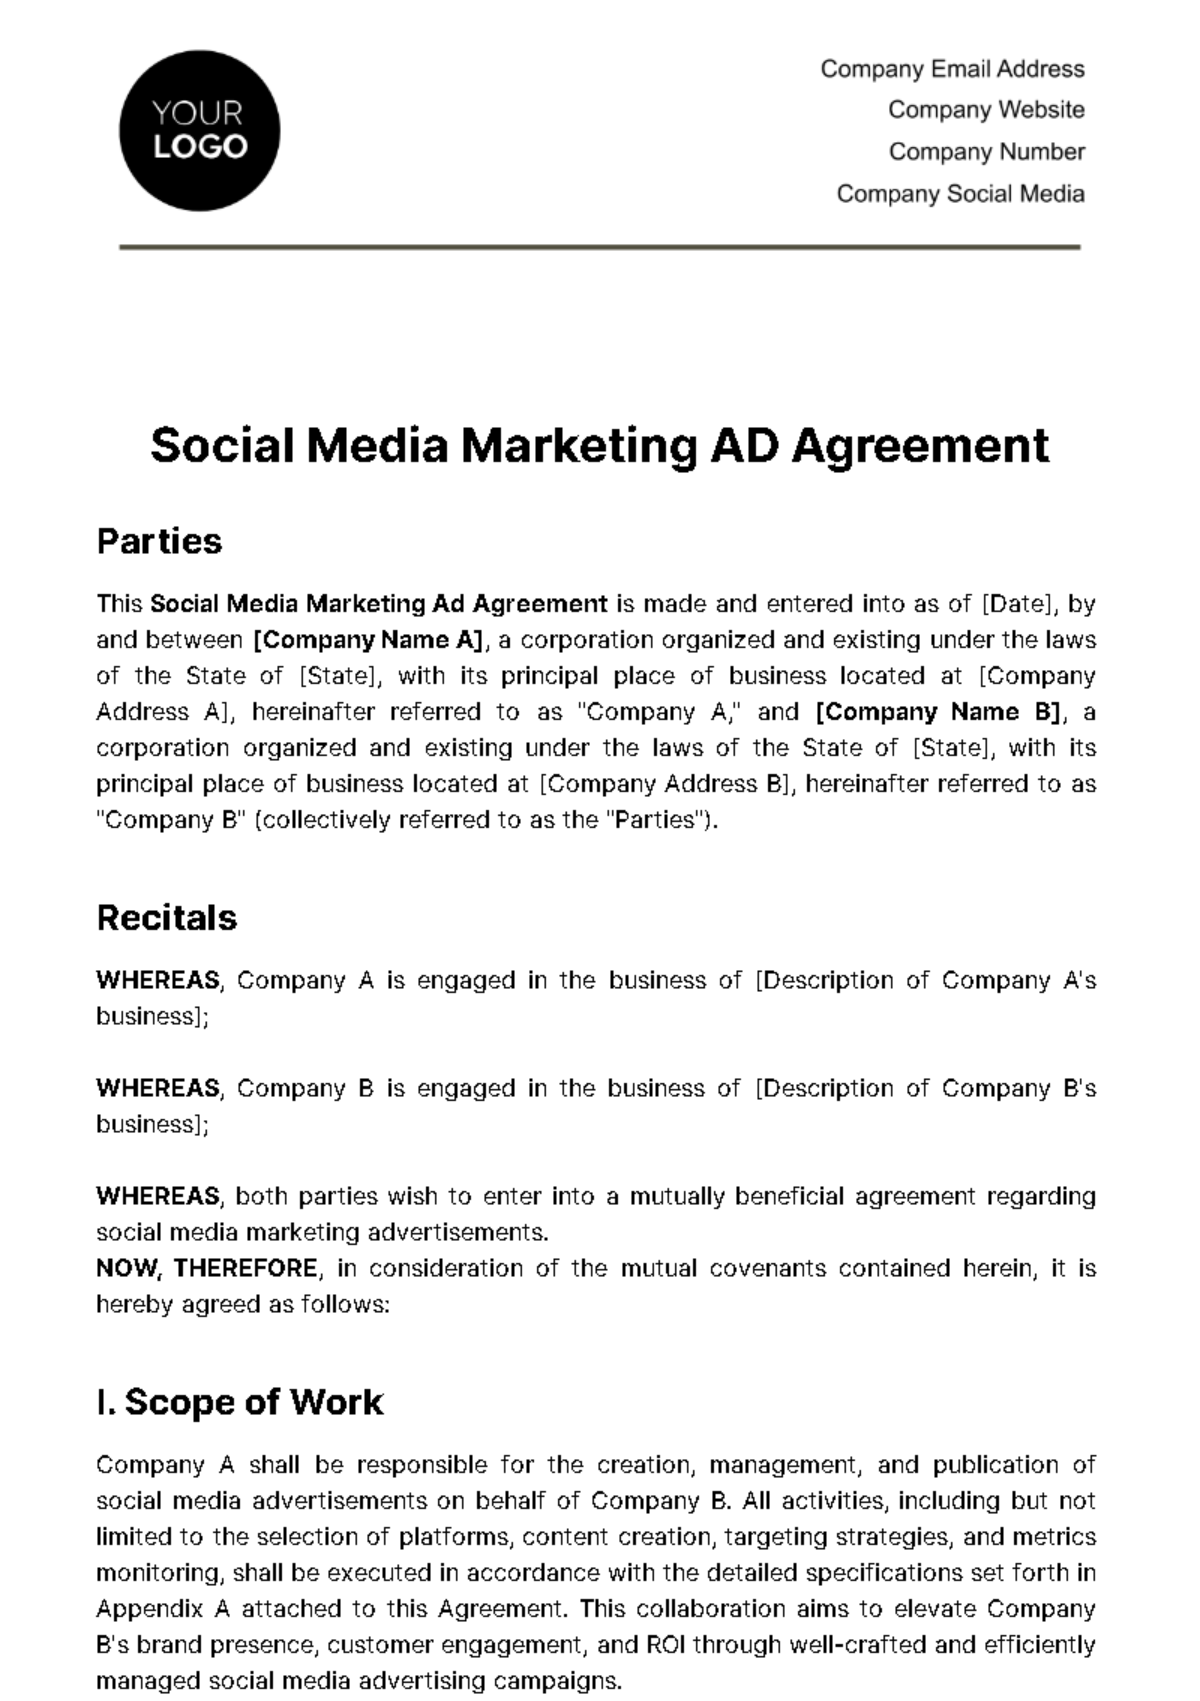 Social Media Marketing Ad Agreement Template